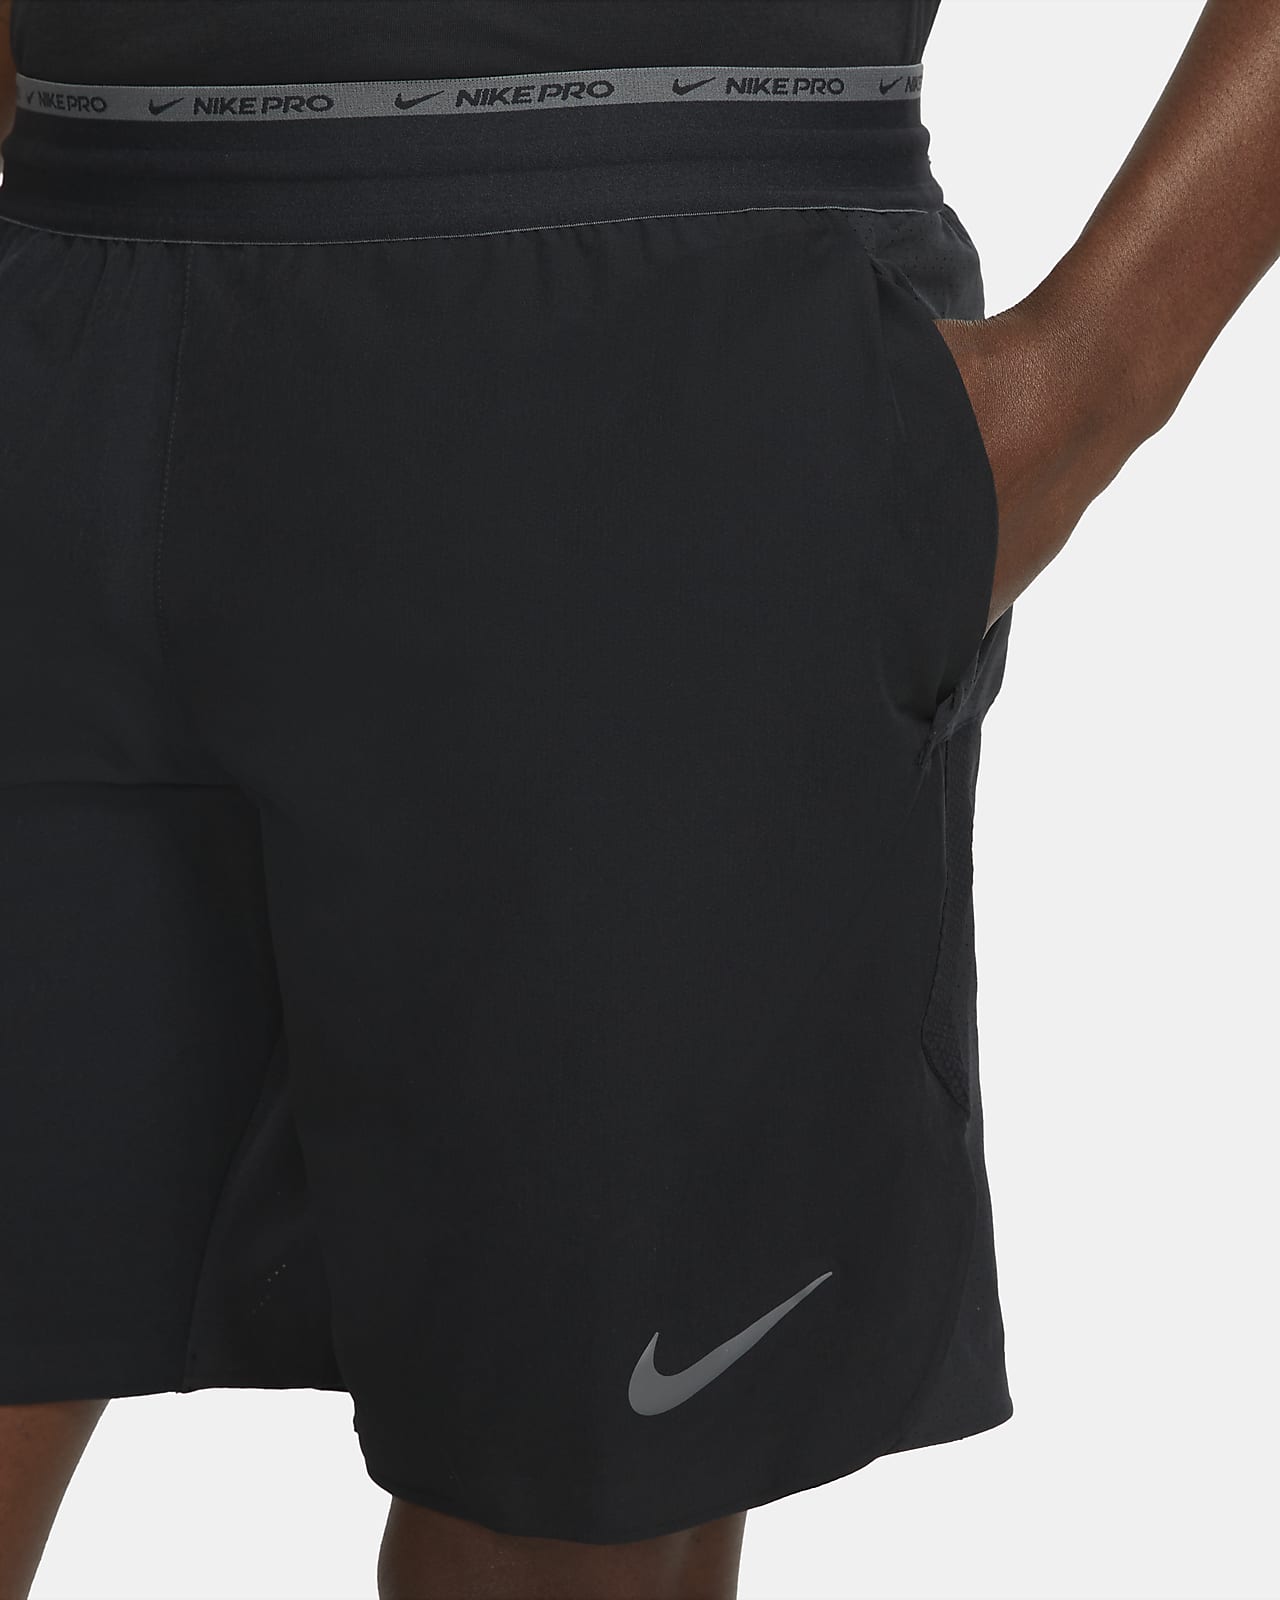 Nike Pro Men's Compression Training Shorts 703086-091 Size 2XL Grey